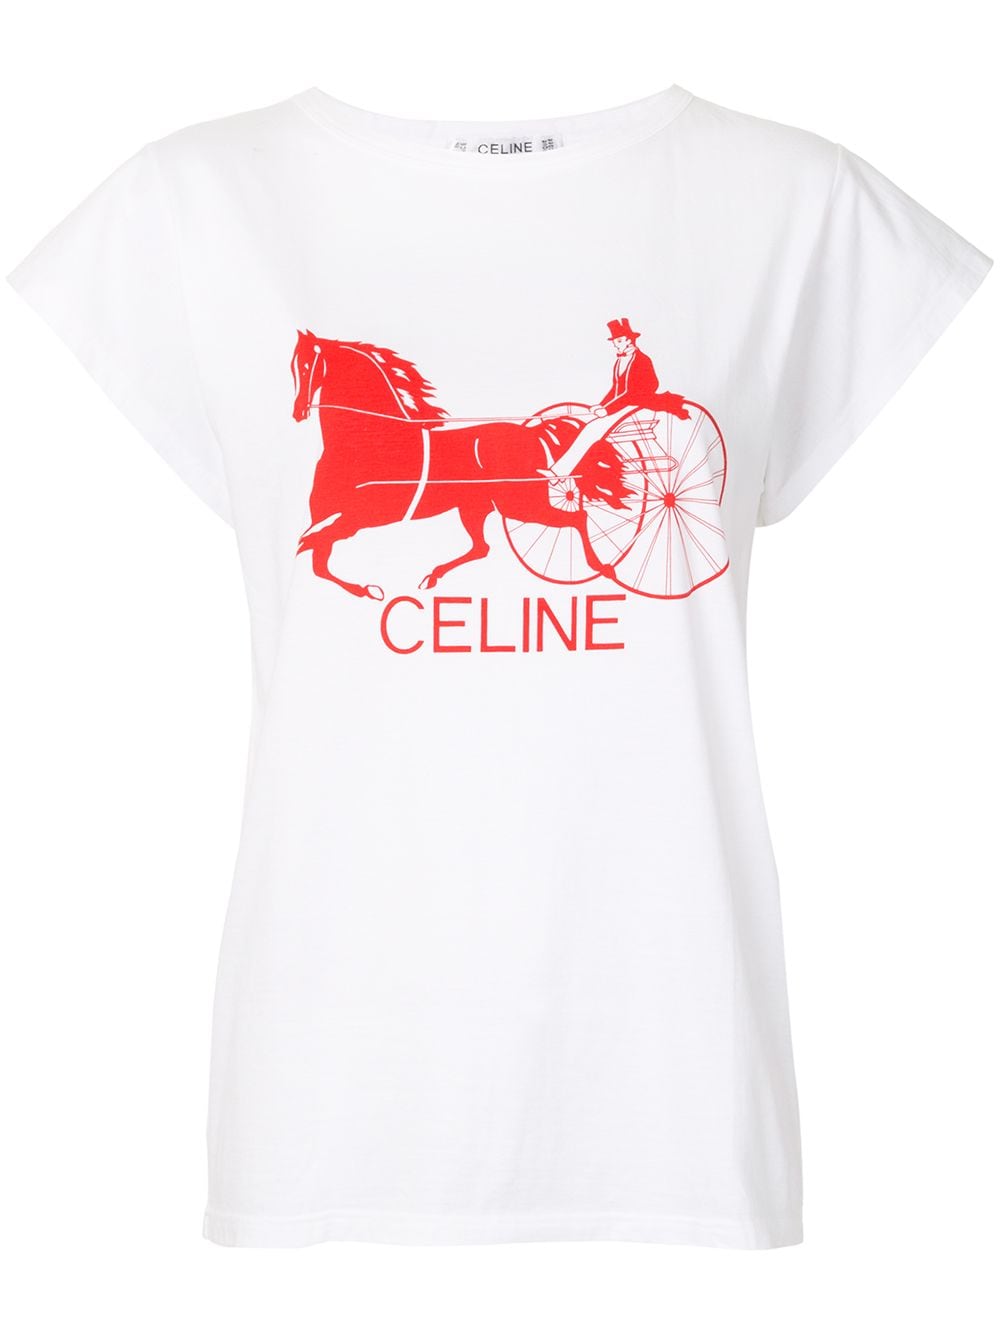 Celine Paris T-shirt, Style Printed T-shirt ,women t-shirt,tshirt